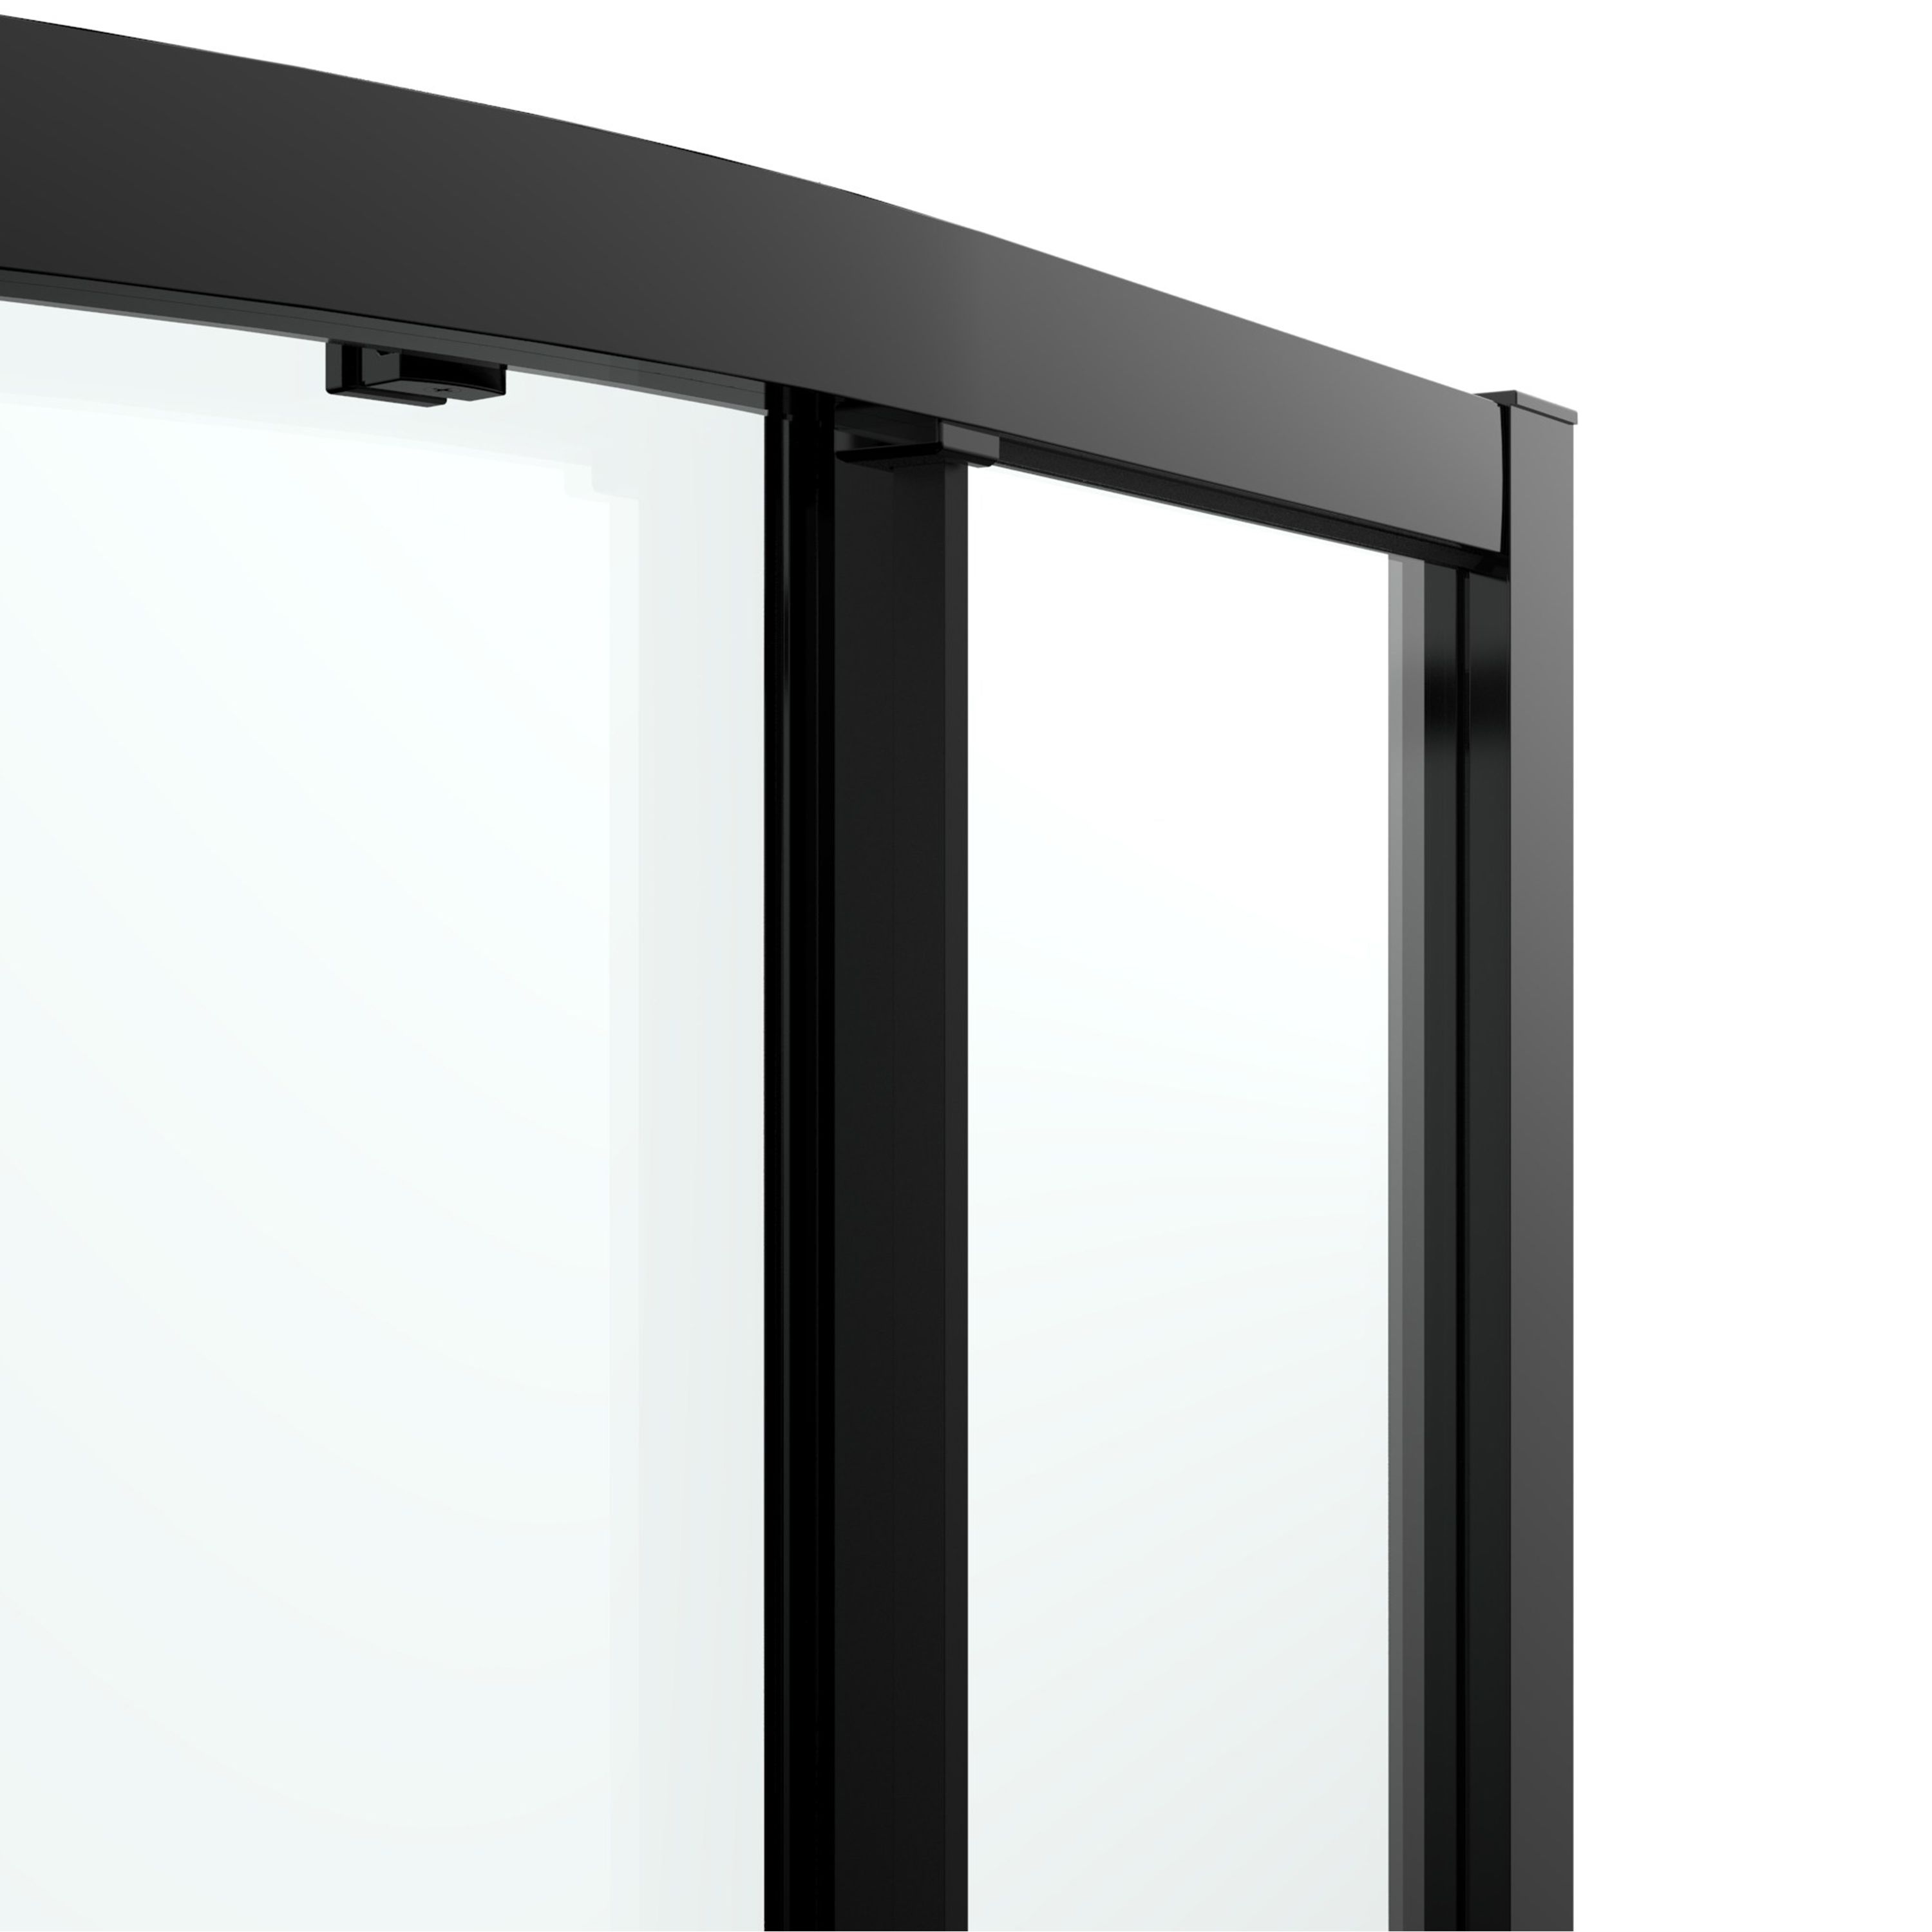 GoodHome Ledava Left-handed Offset quadrant Shower Enclosure & tray - Corner entry double sliding door (H)195cm (W)80cm (D)100cm